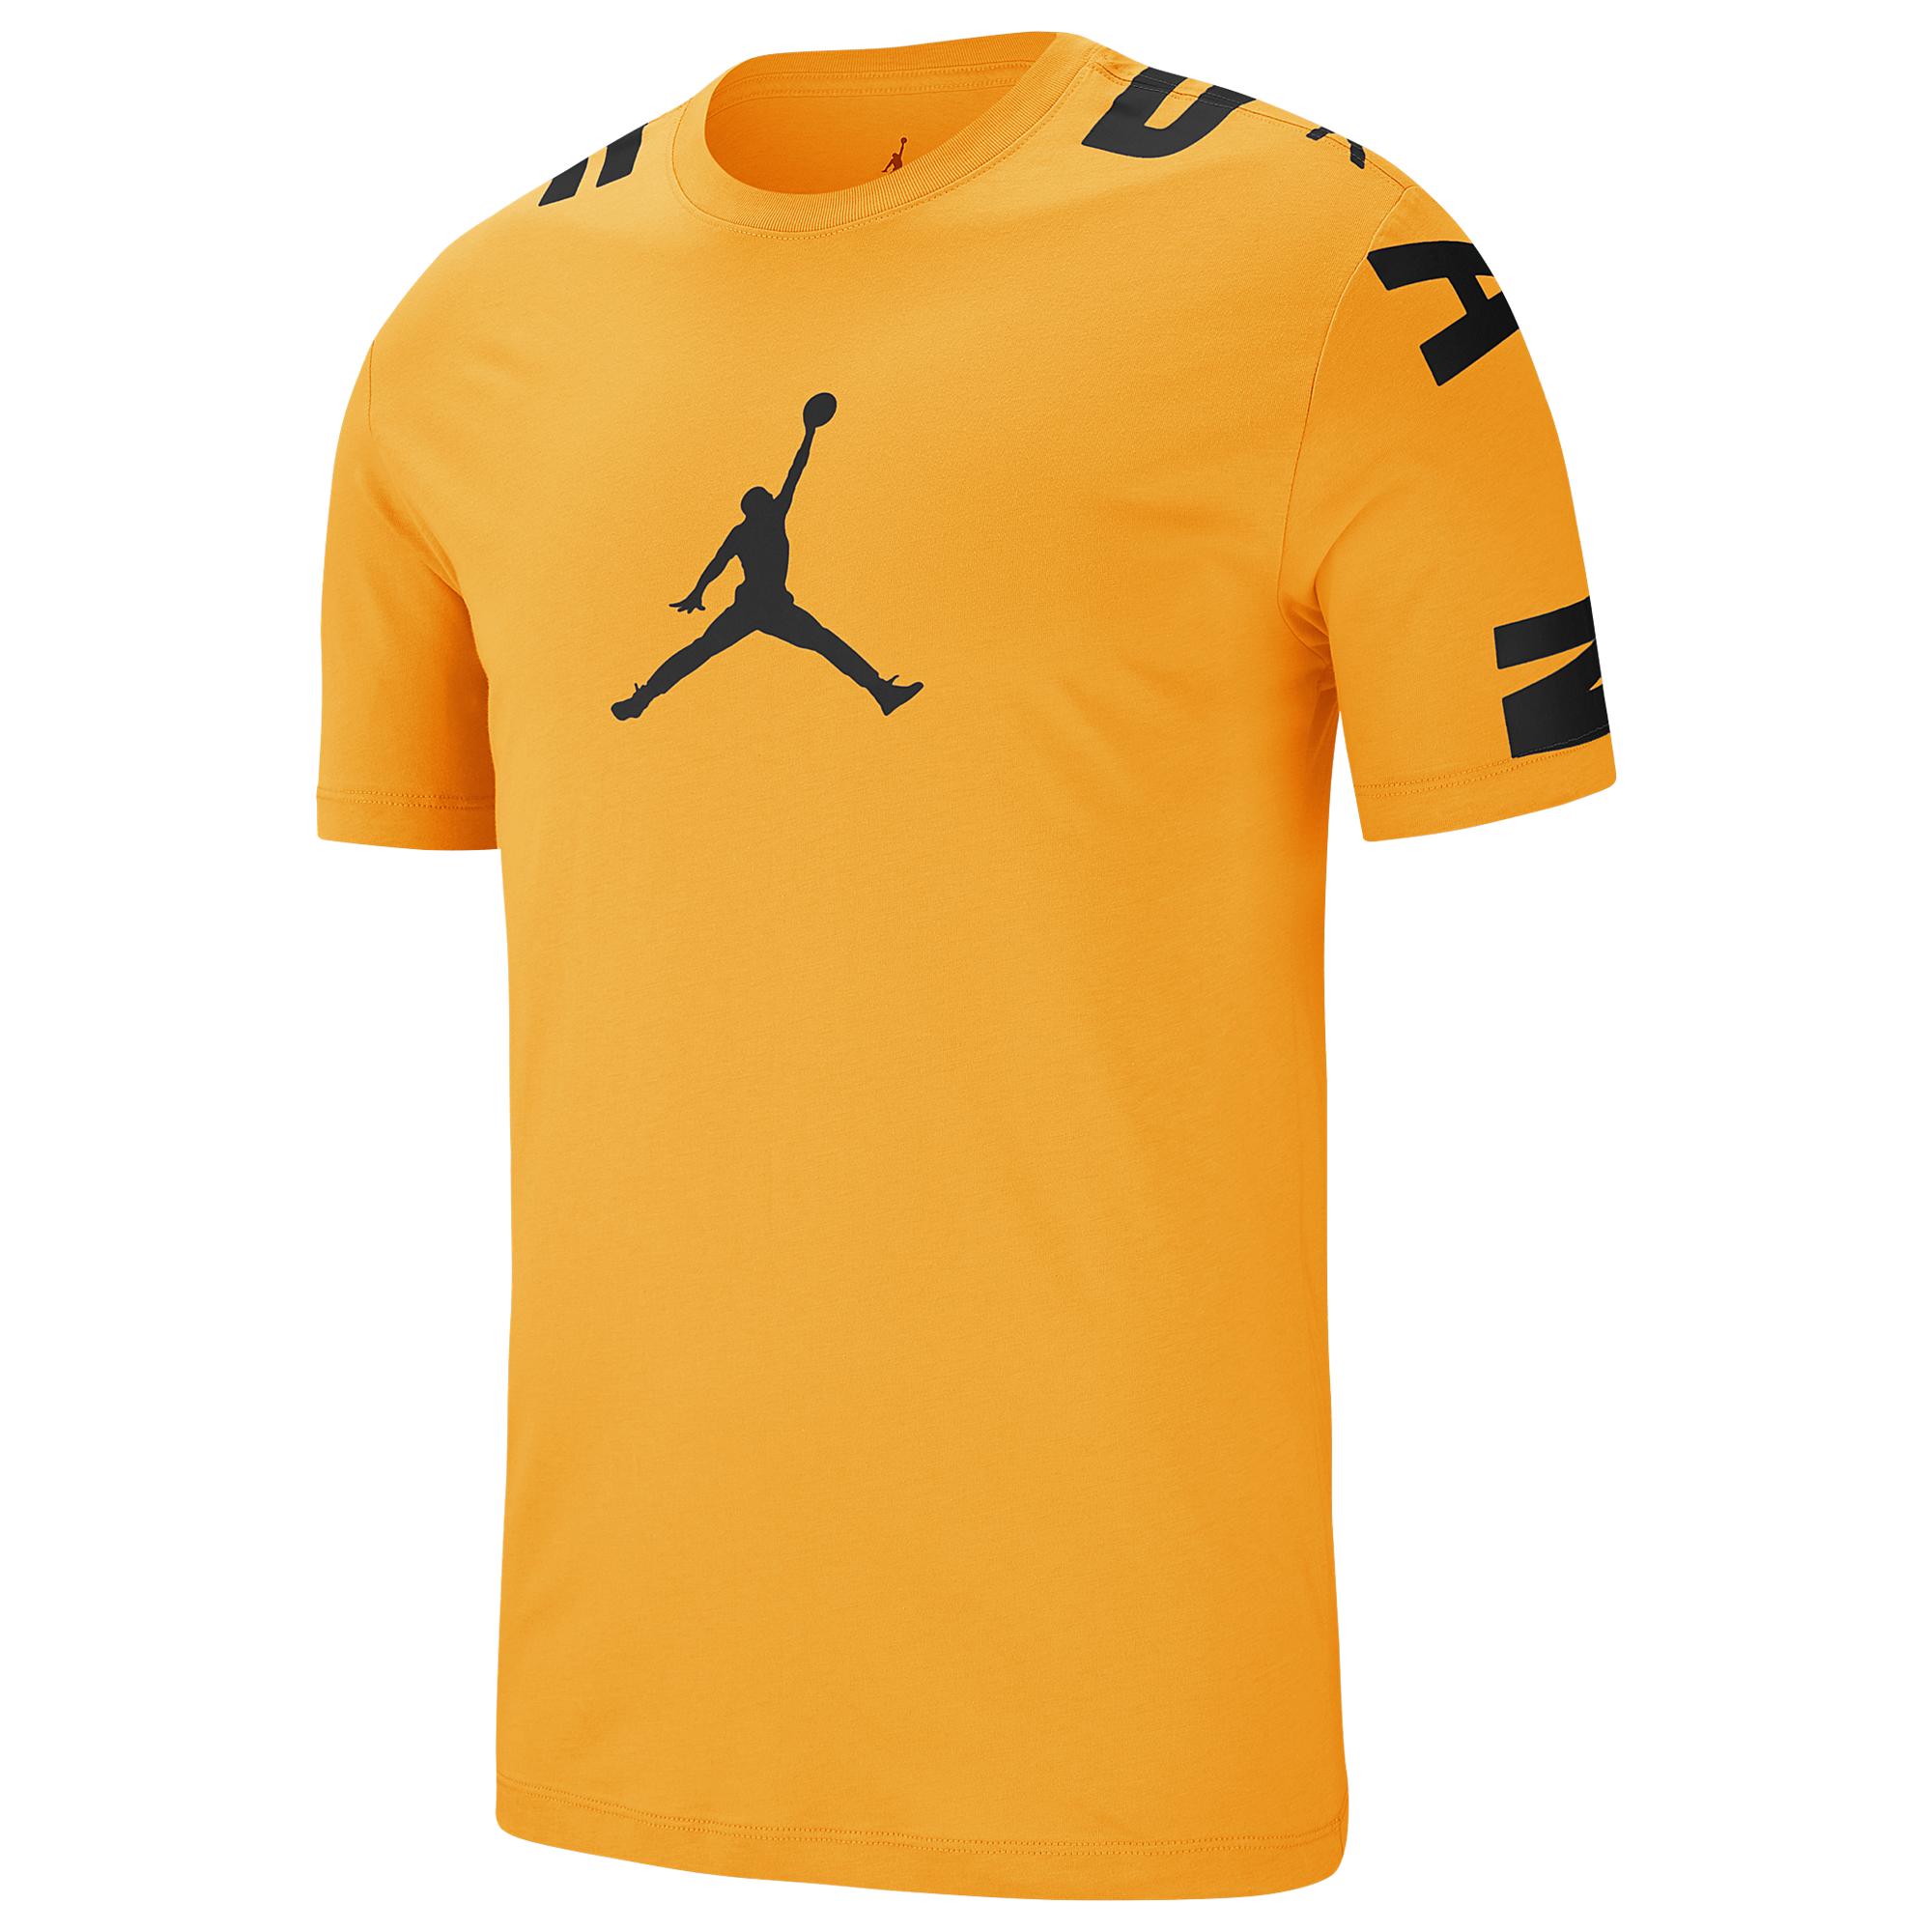 Nike Cotton Jsw Stretch 23 T-shirt in 